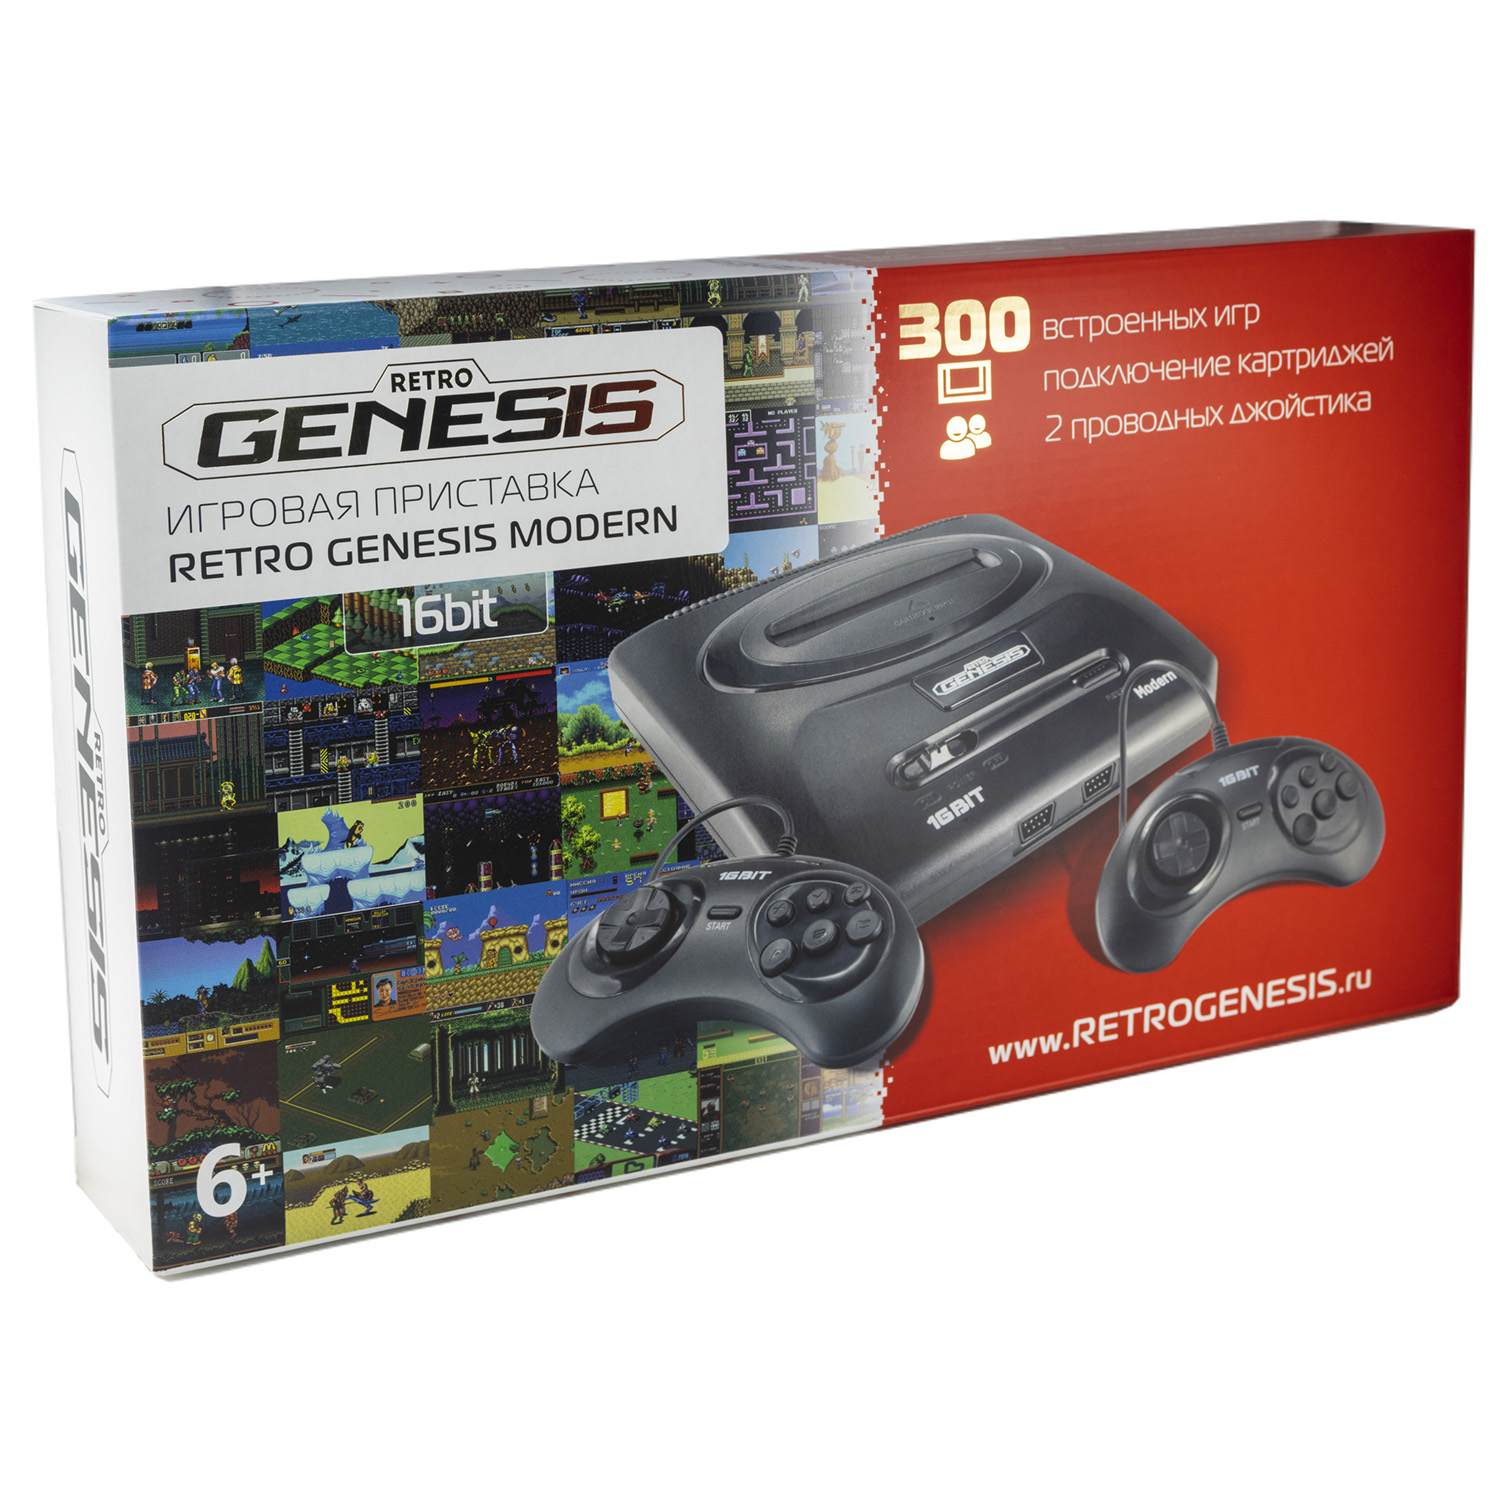 Игровая приставка Retro Genesis "SEGA Retro Genesis Modern" ConSkDn92